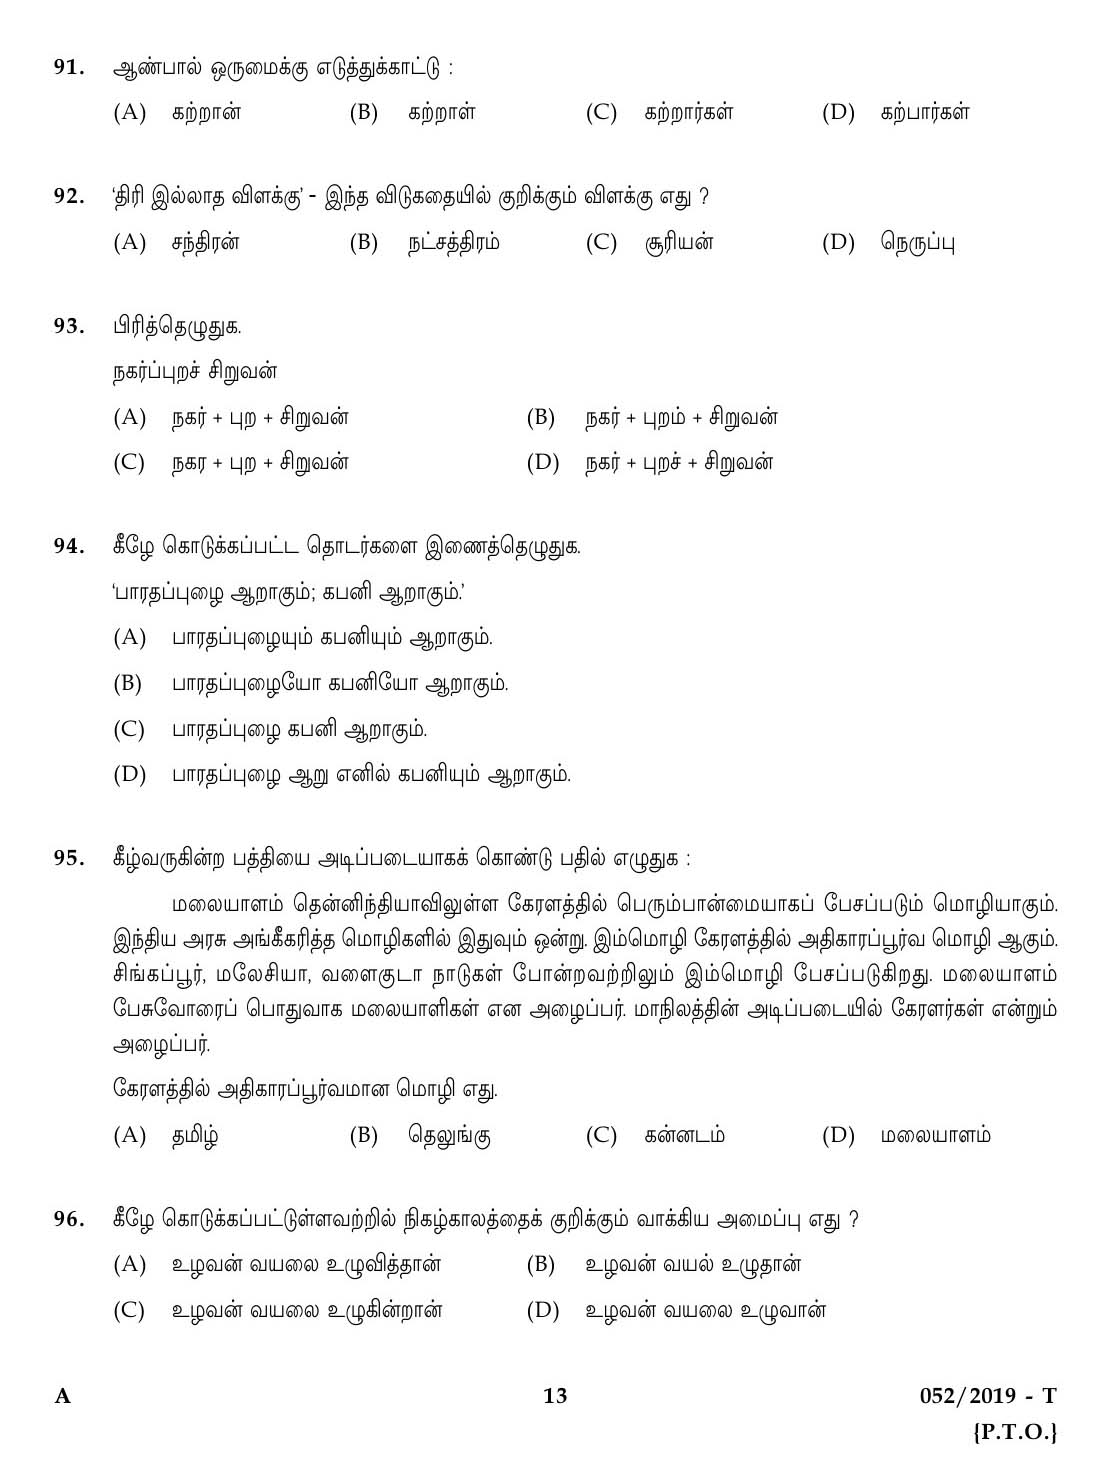 Village Extension Officer Grade II Exam Paper 2019 Code 522019 T 12